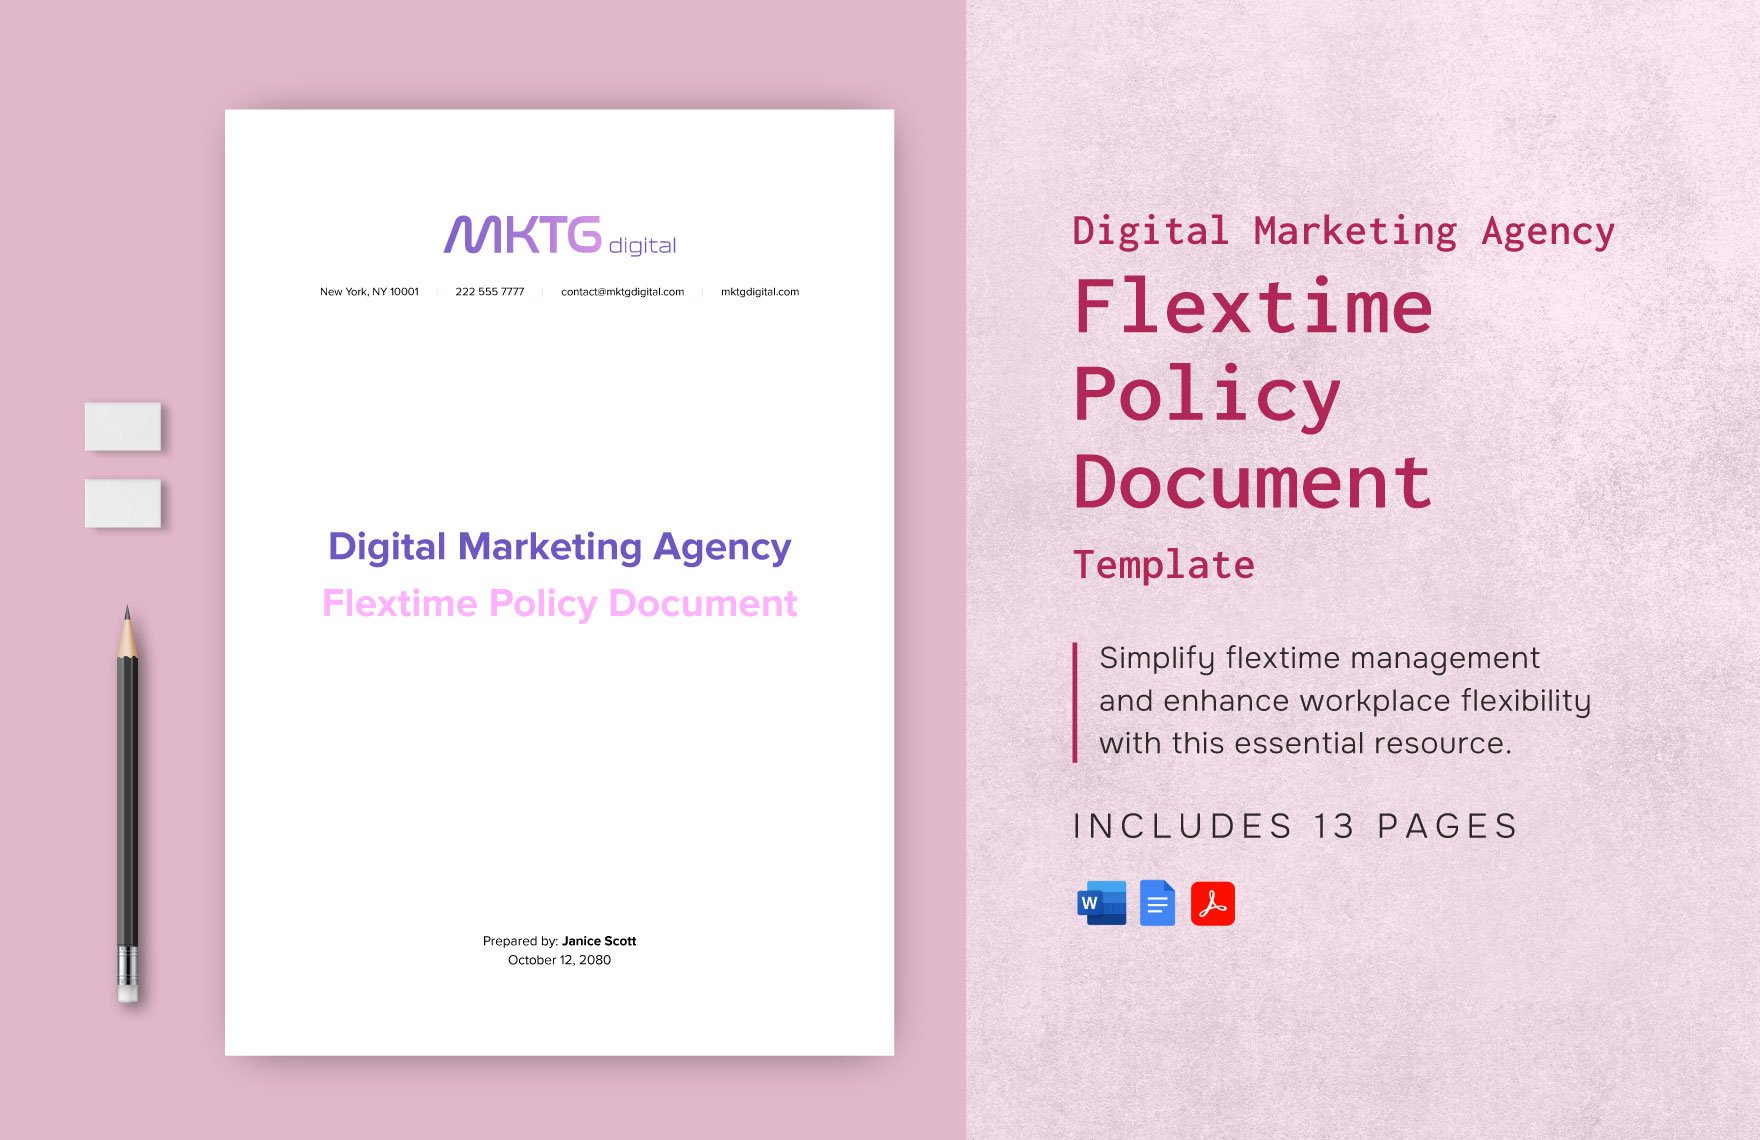 Digital Marketing Agency Flextime Policy Document Template